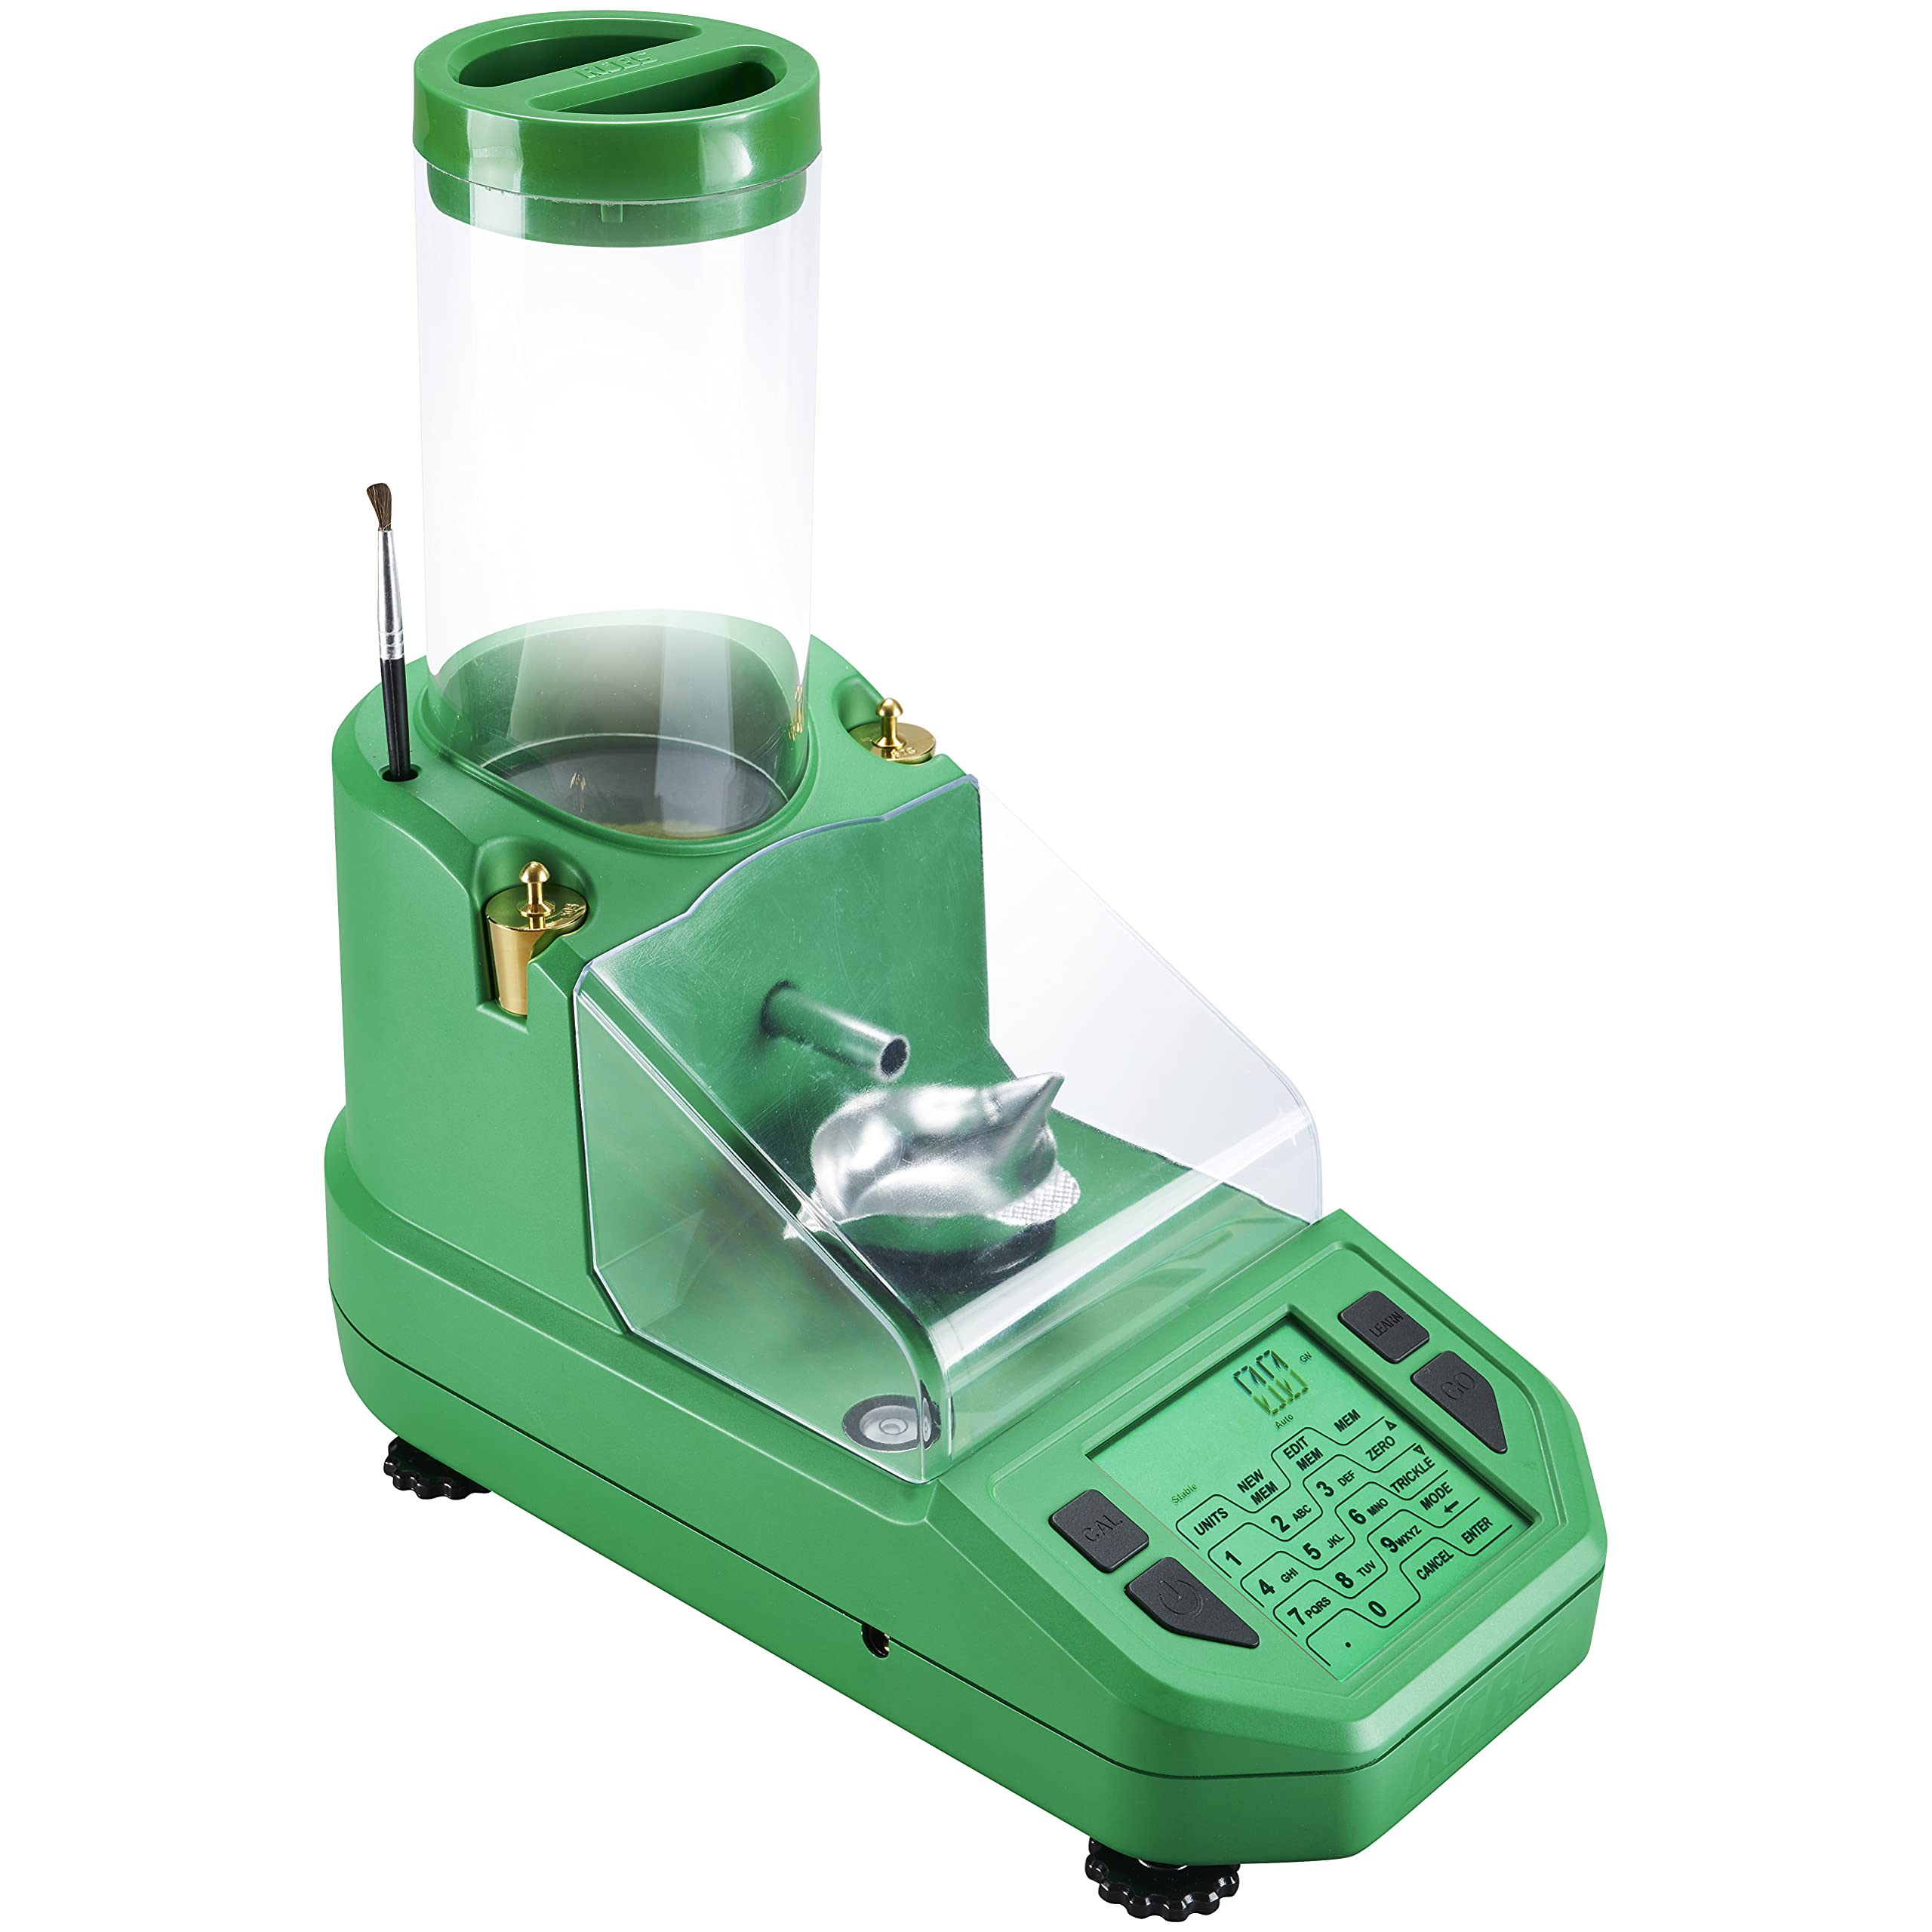 RCBS unisex adult Digital Dispenser Scale Hunting Reloading Powder Handling Tools, Green, One Size US